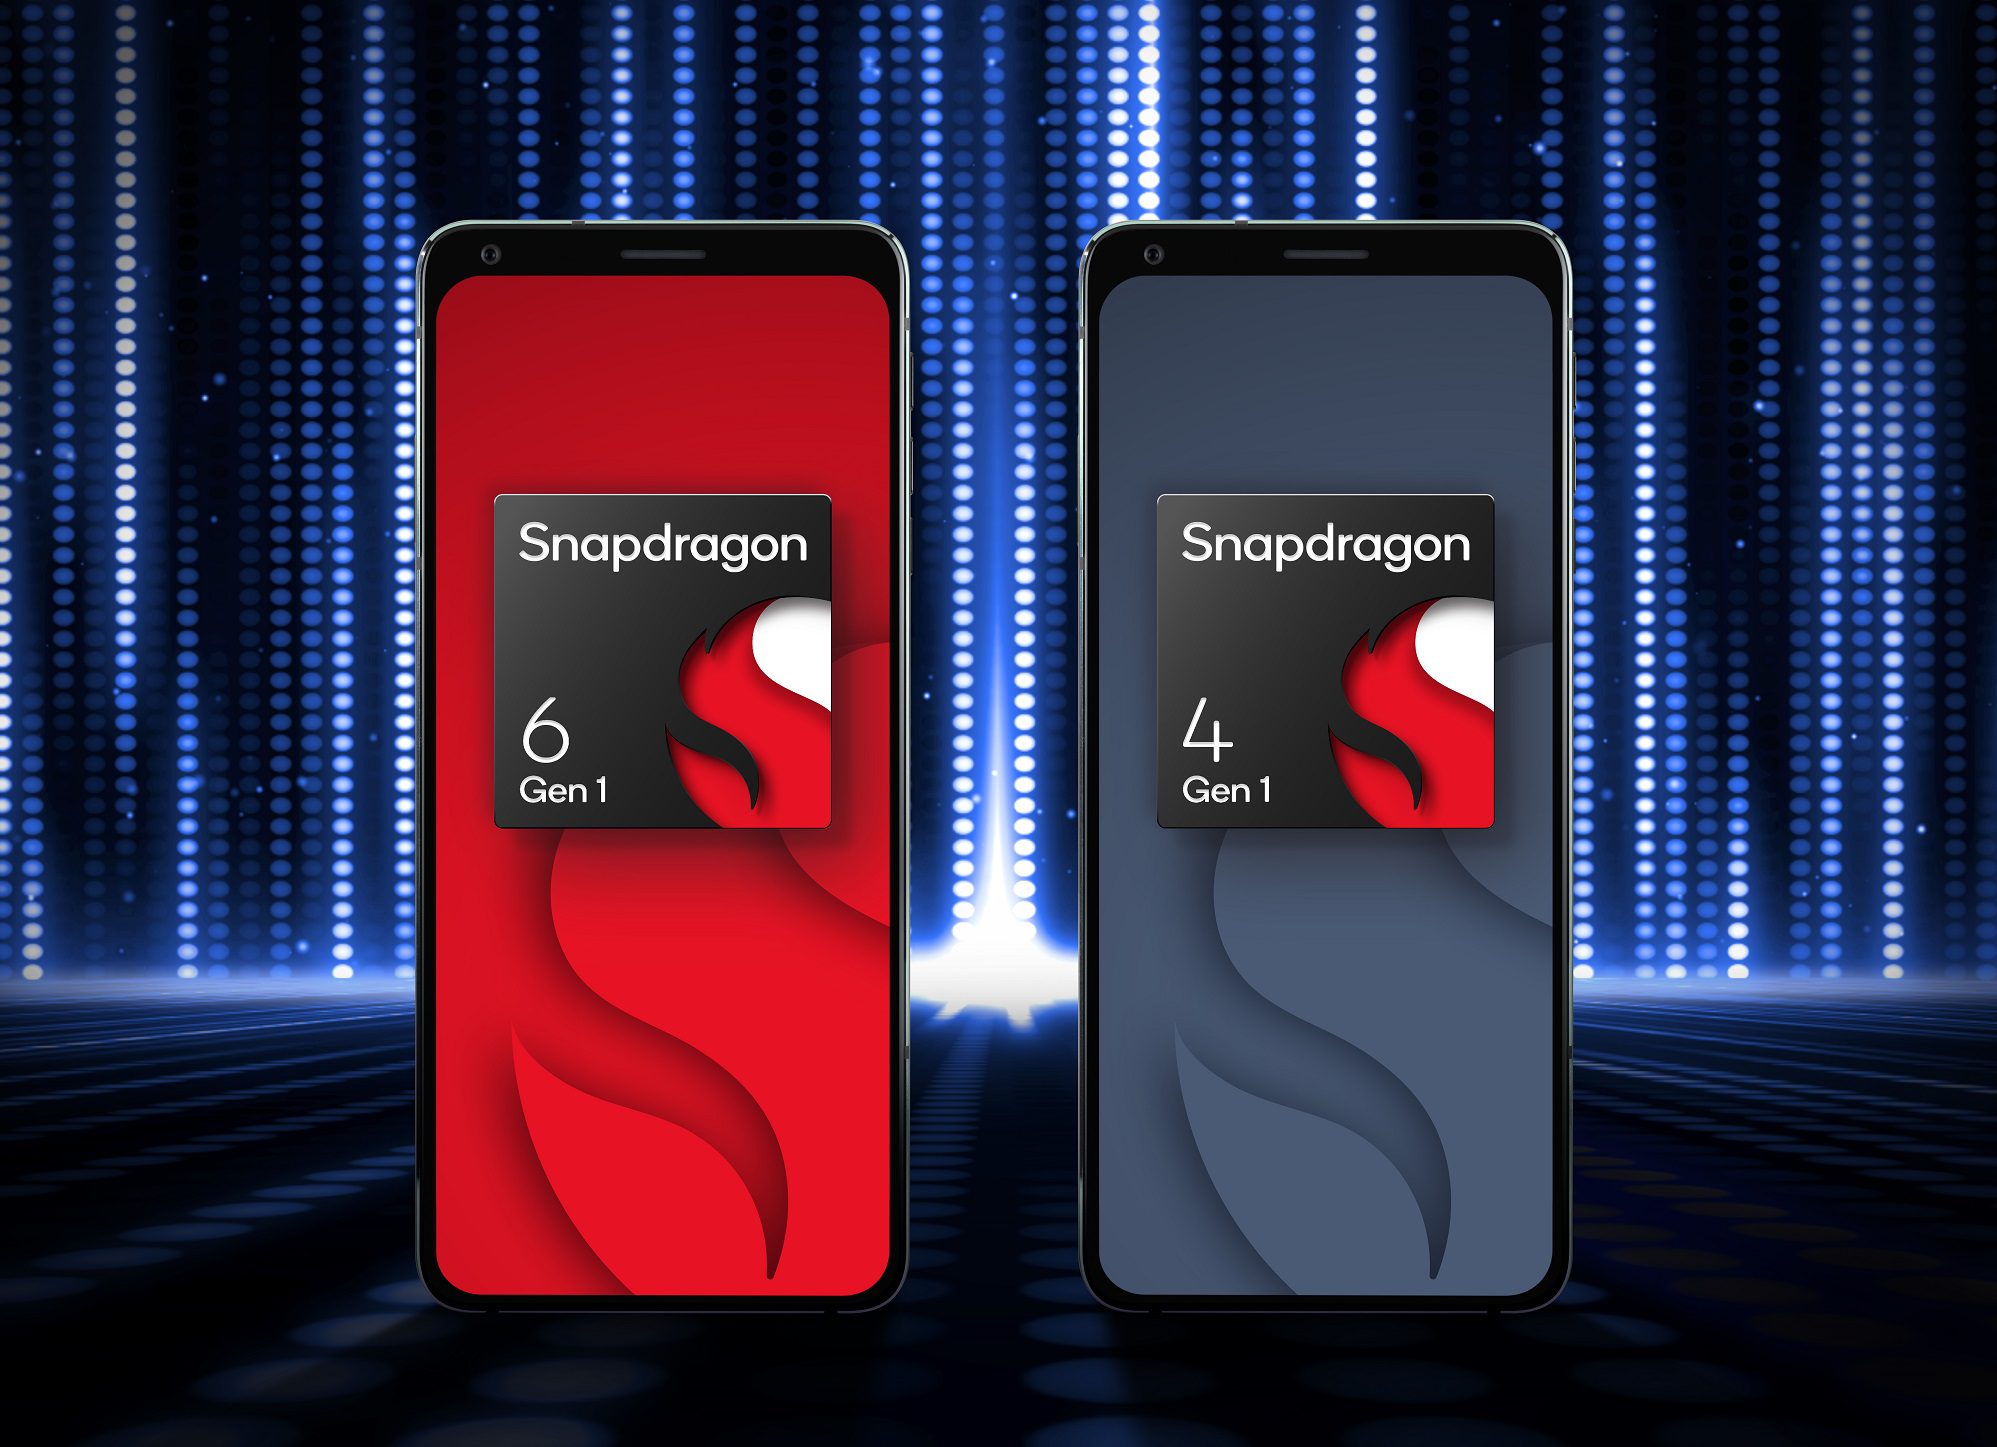 Snapdragon 6 Gen 1 and 4 Gen 1 Reference Designs